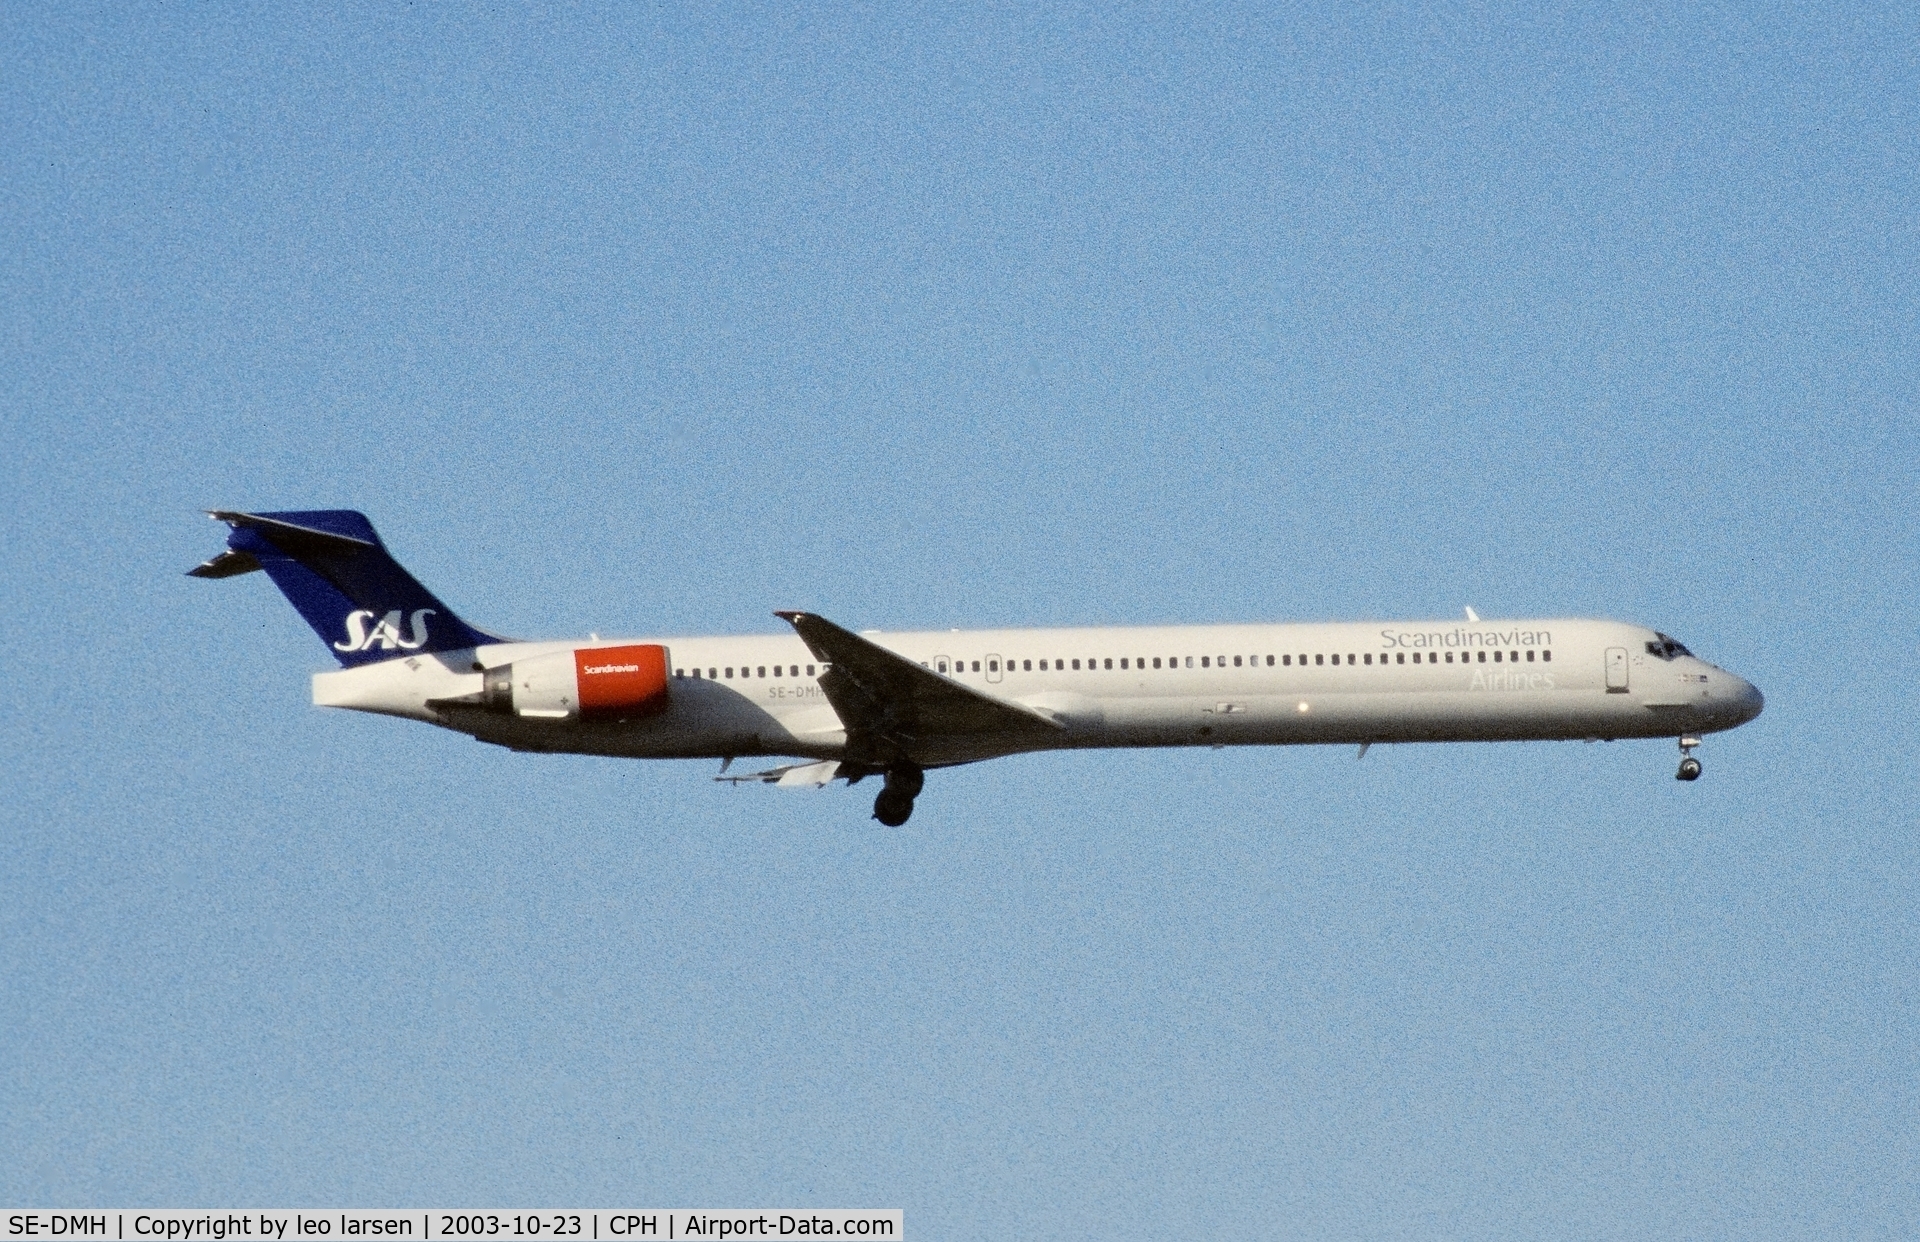 SE-DMH, 1997 McDonnell Douglas MD-90-30 C/N 53543, Copenhagen 23.10.2003